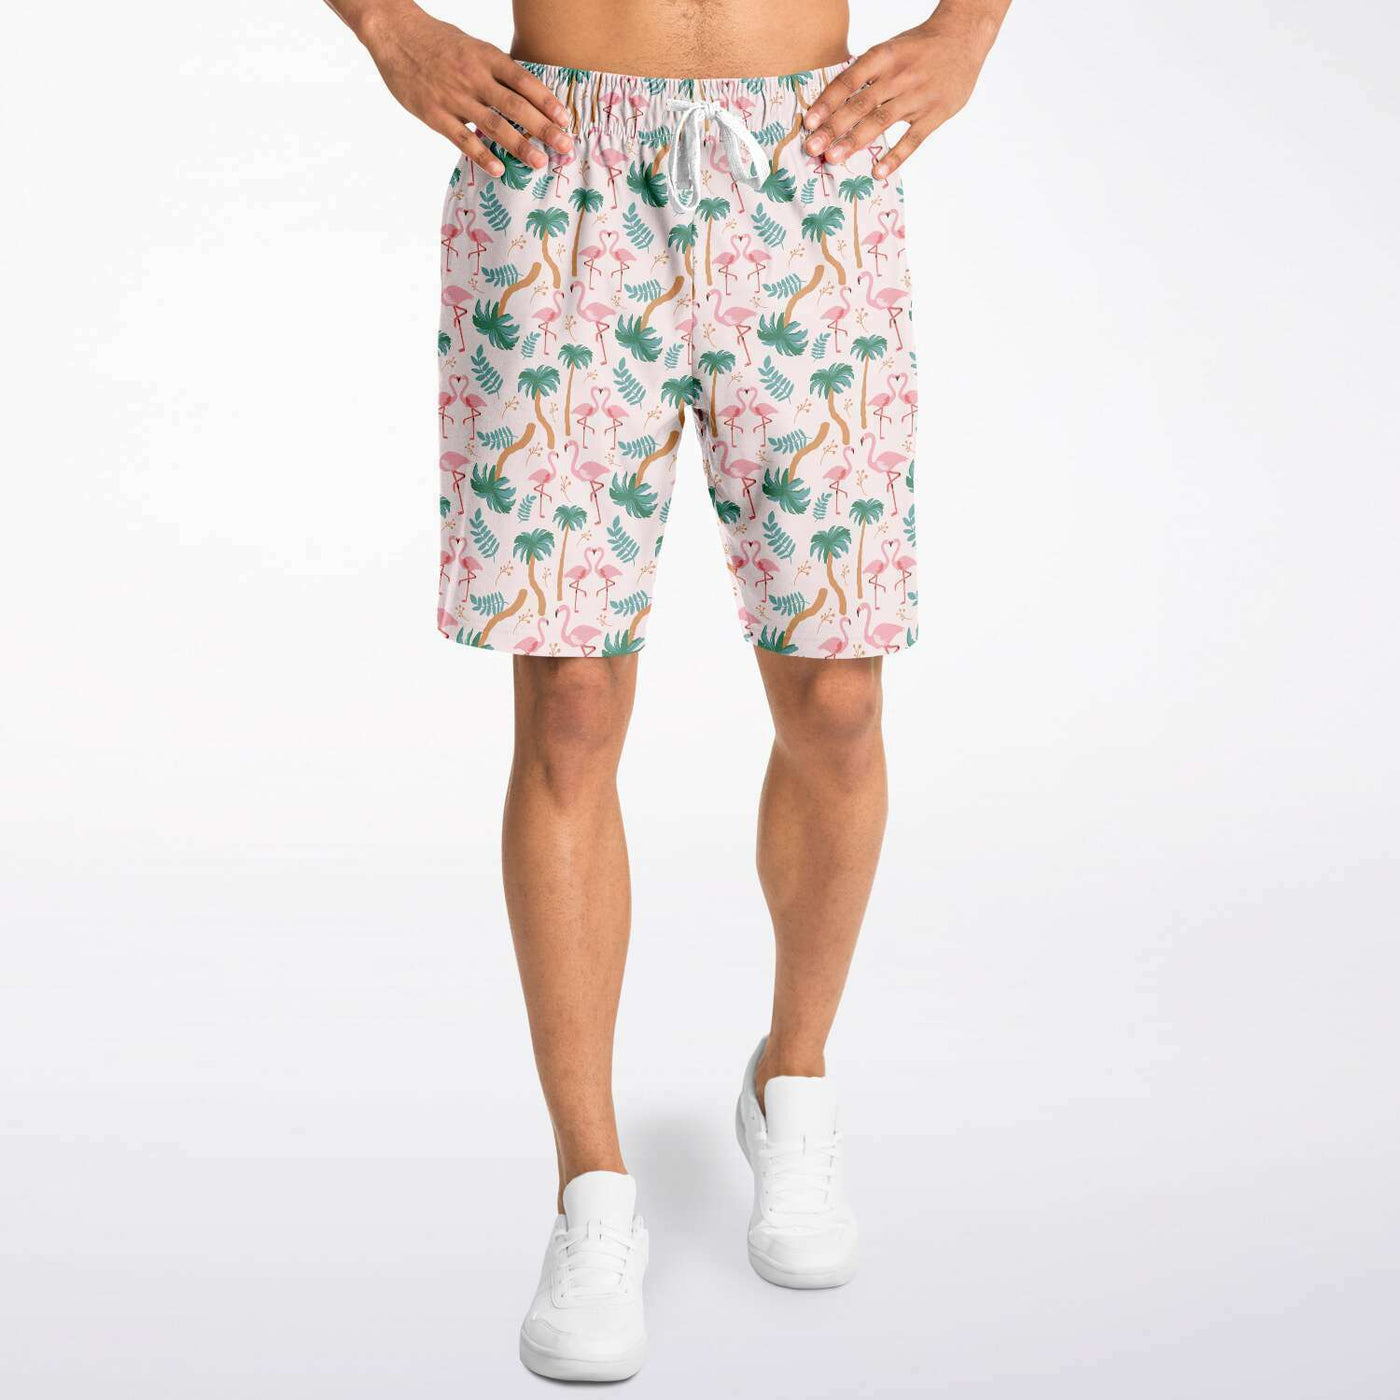 Flamingo Tropical Floral Shorts Subliminator